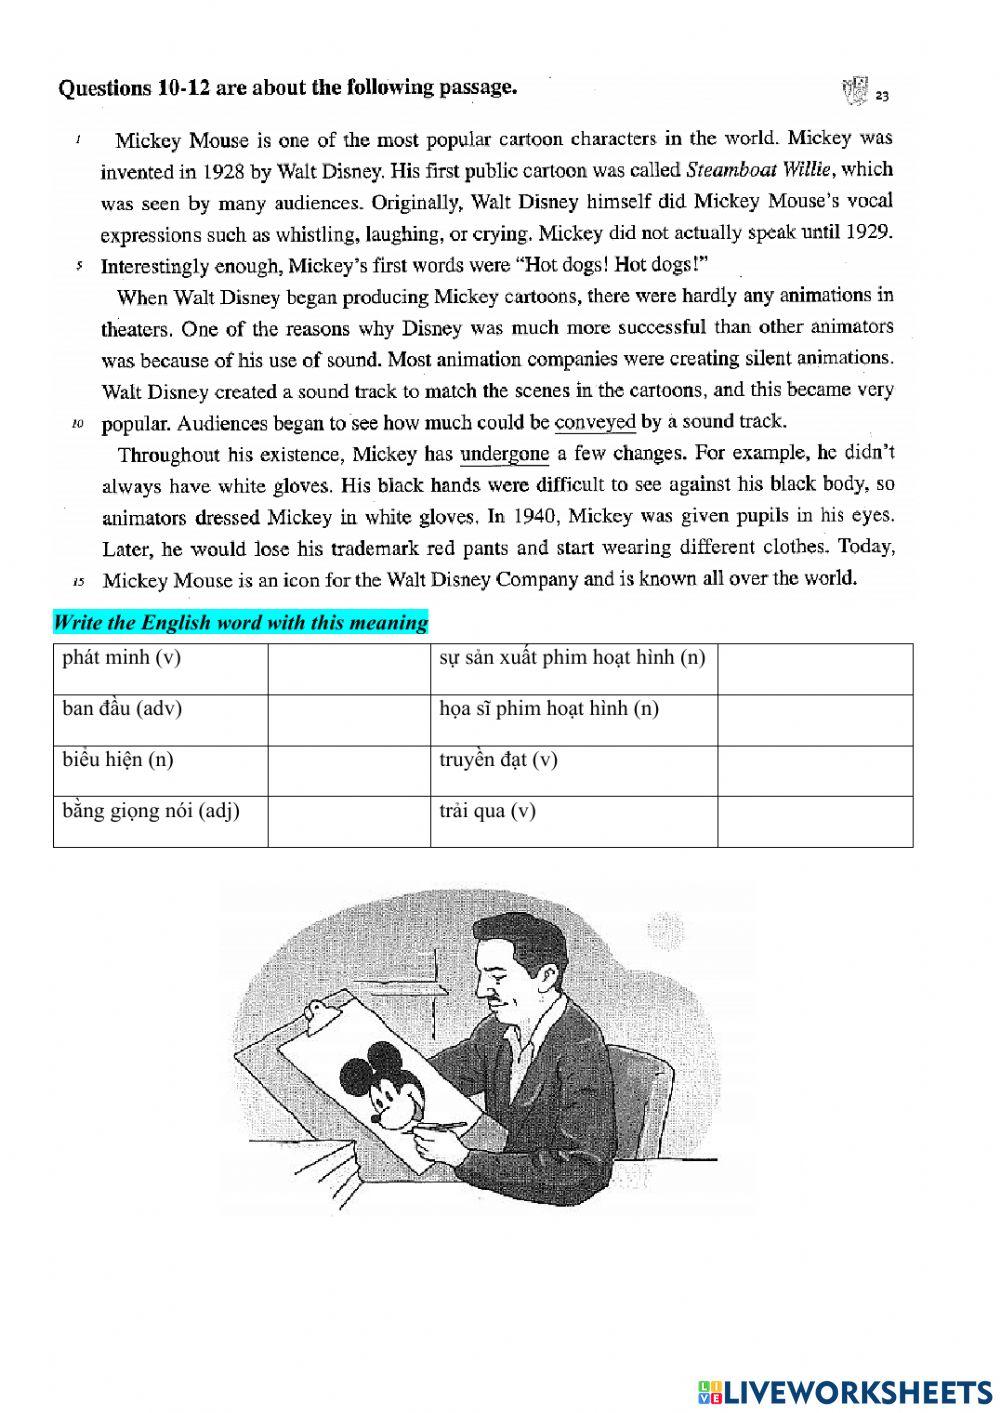 Reading Skills - Vocabulary (2)